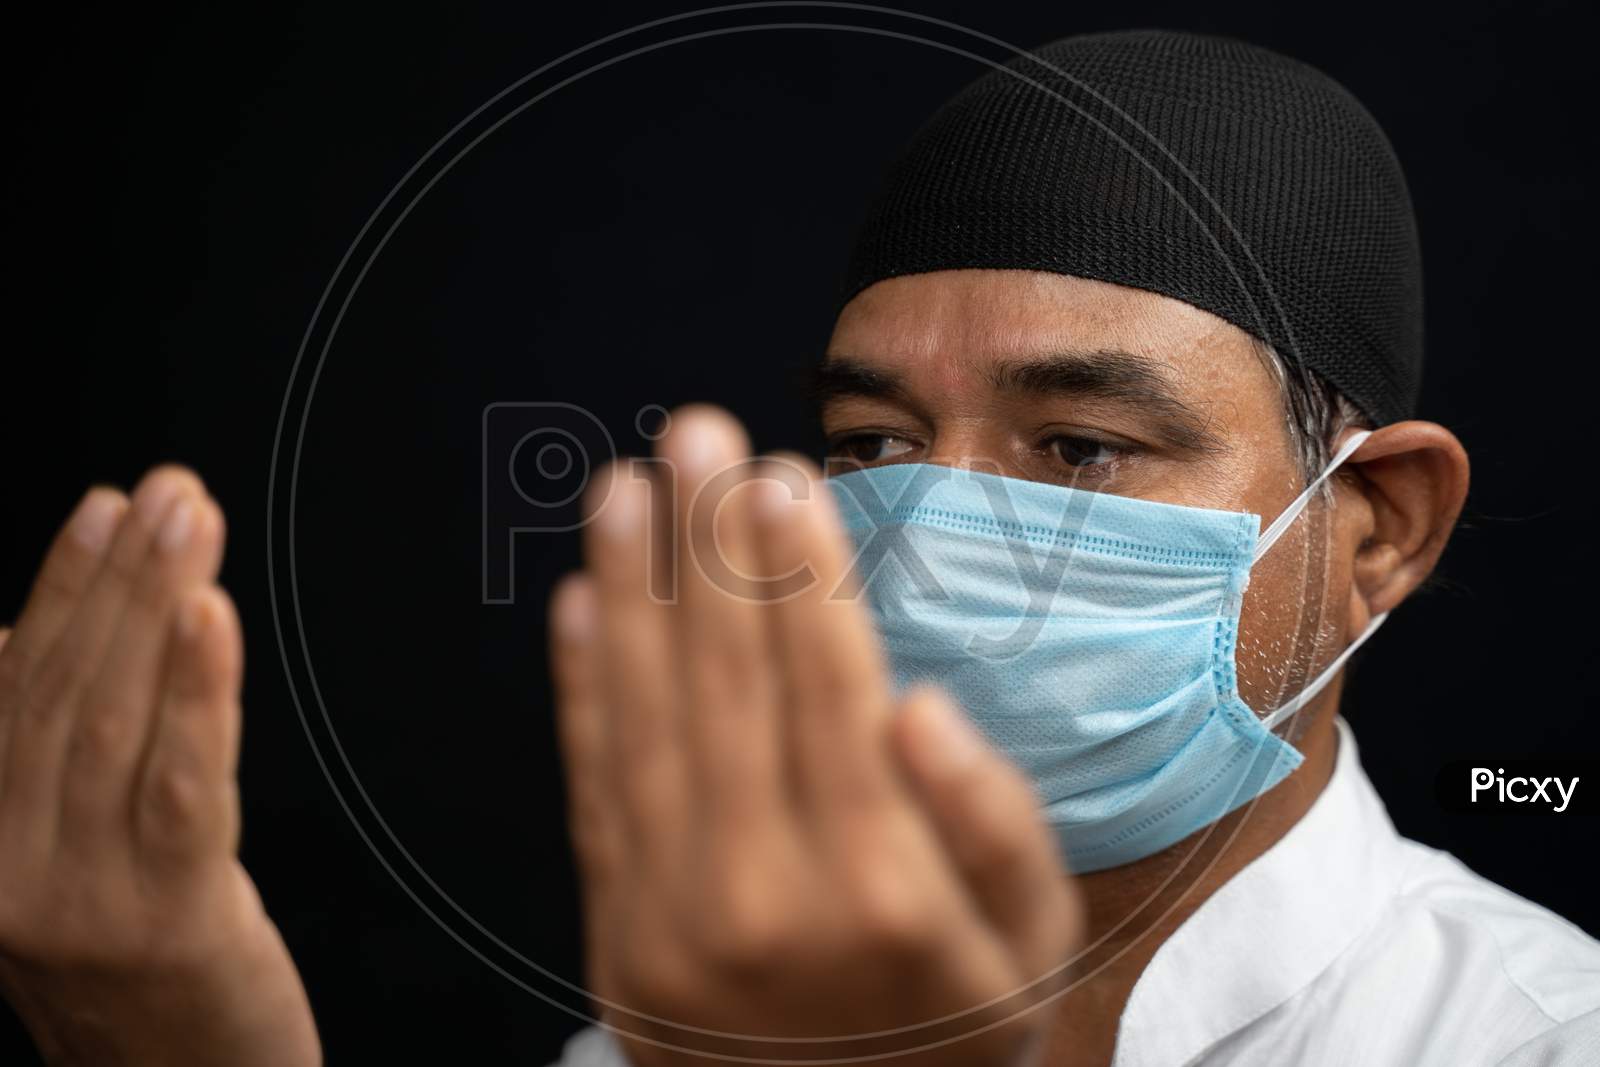 Muslim Man In Medical Mask Preforming Salah Or Prayer By Closing Eyes.